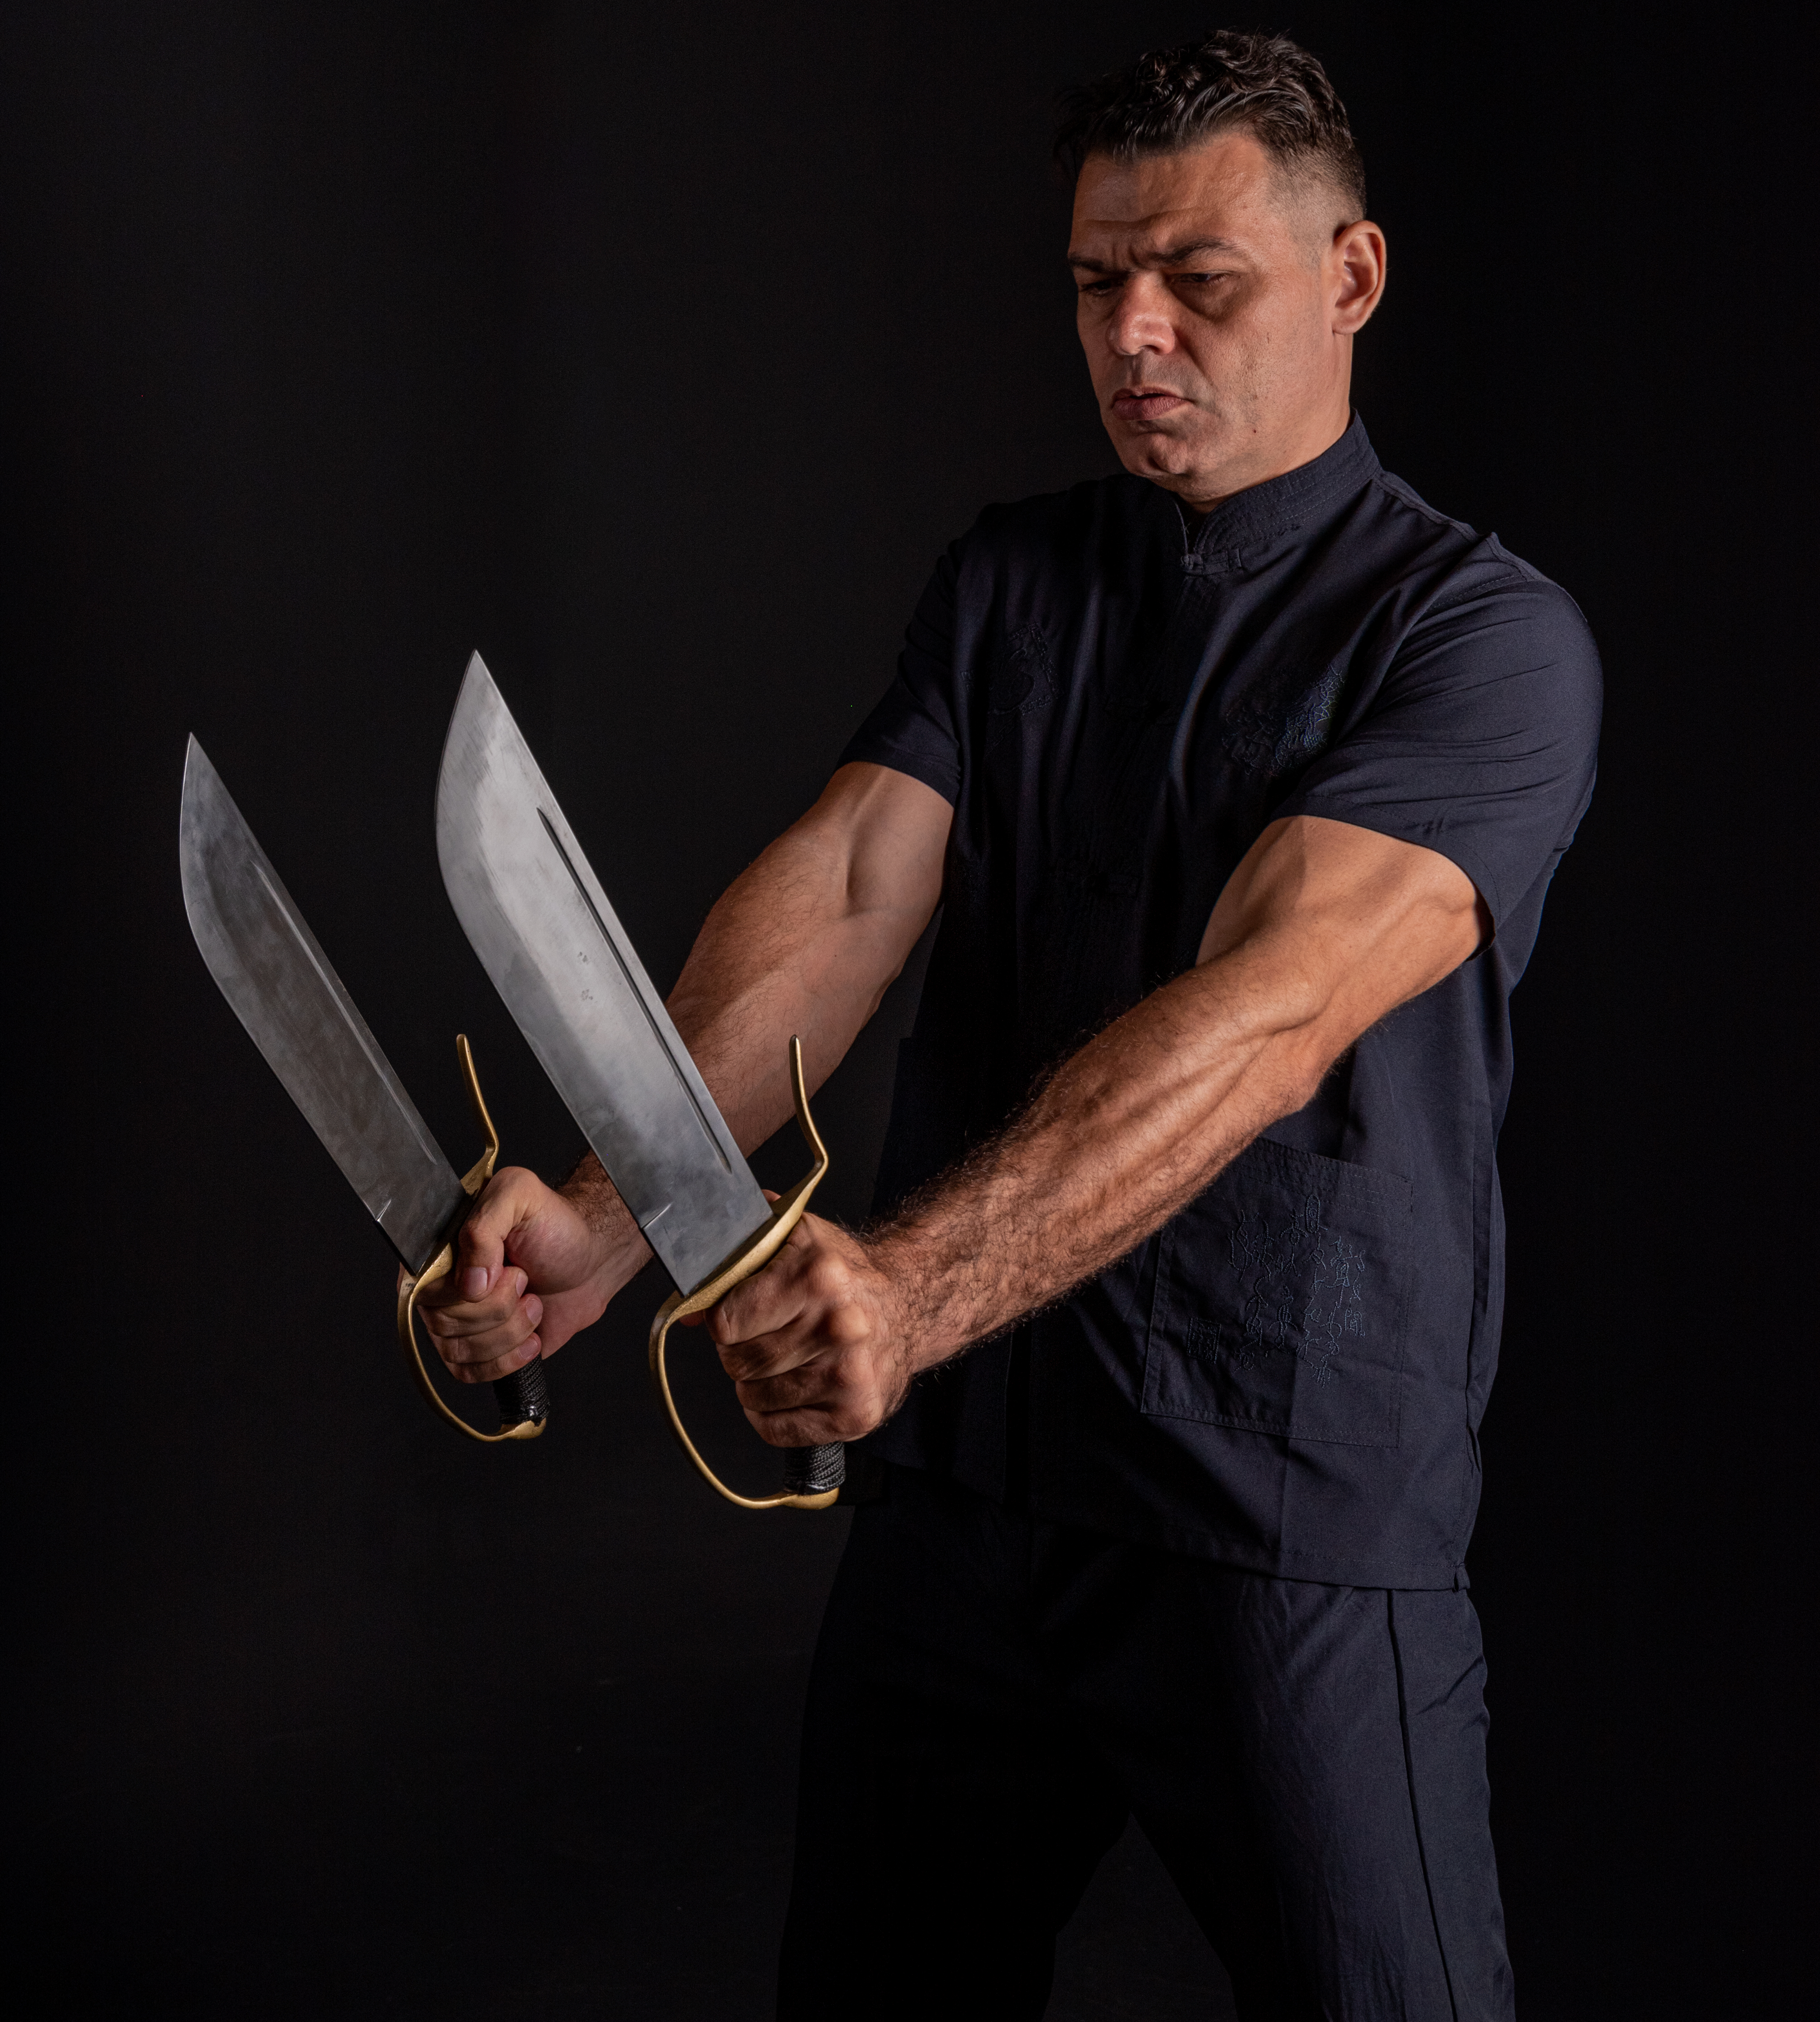 WING CHUN Kung Fu do Filme O Grande Mestre, Aprenda Técnica de Defesa de  Soco no Rosto e Abdomen 